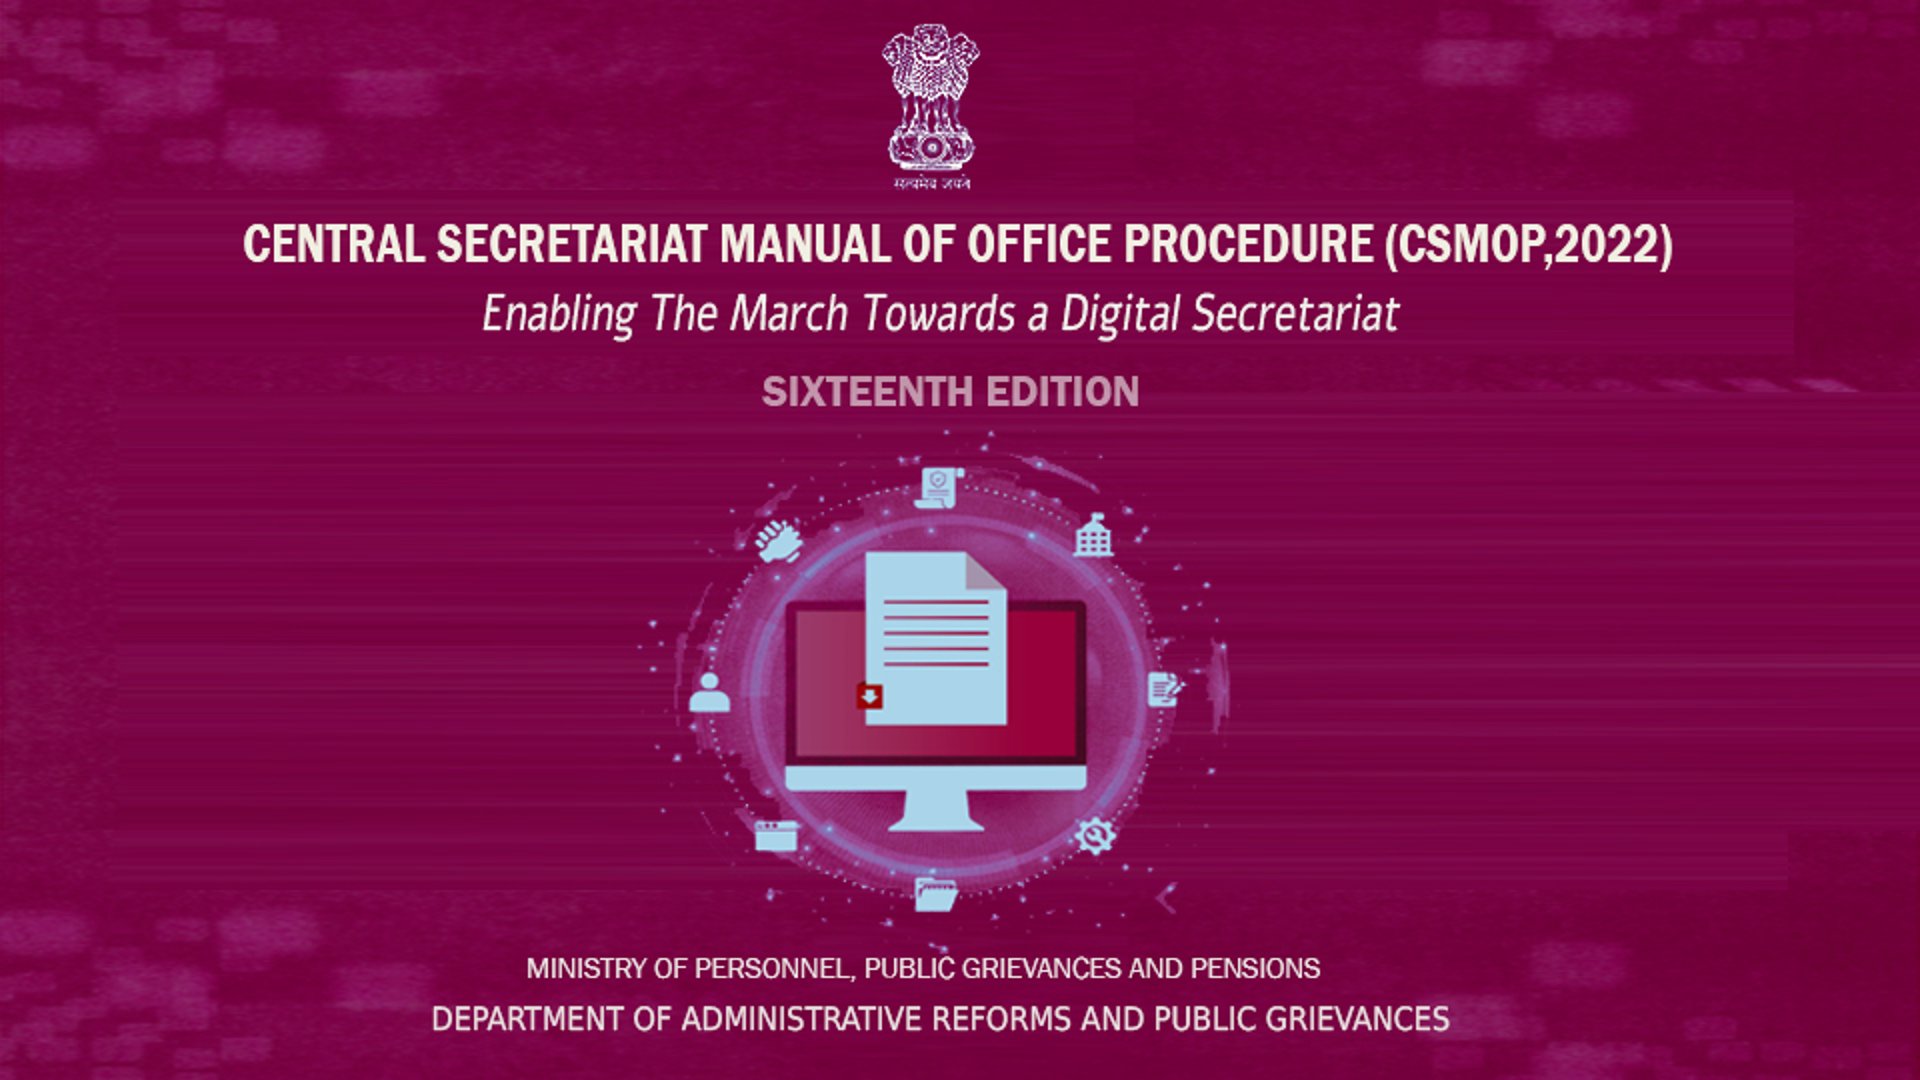 Central Secretariat Manual of Office Procedure (CSMOP, 2022)